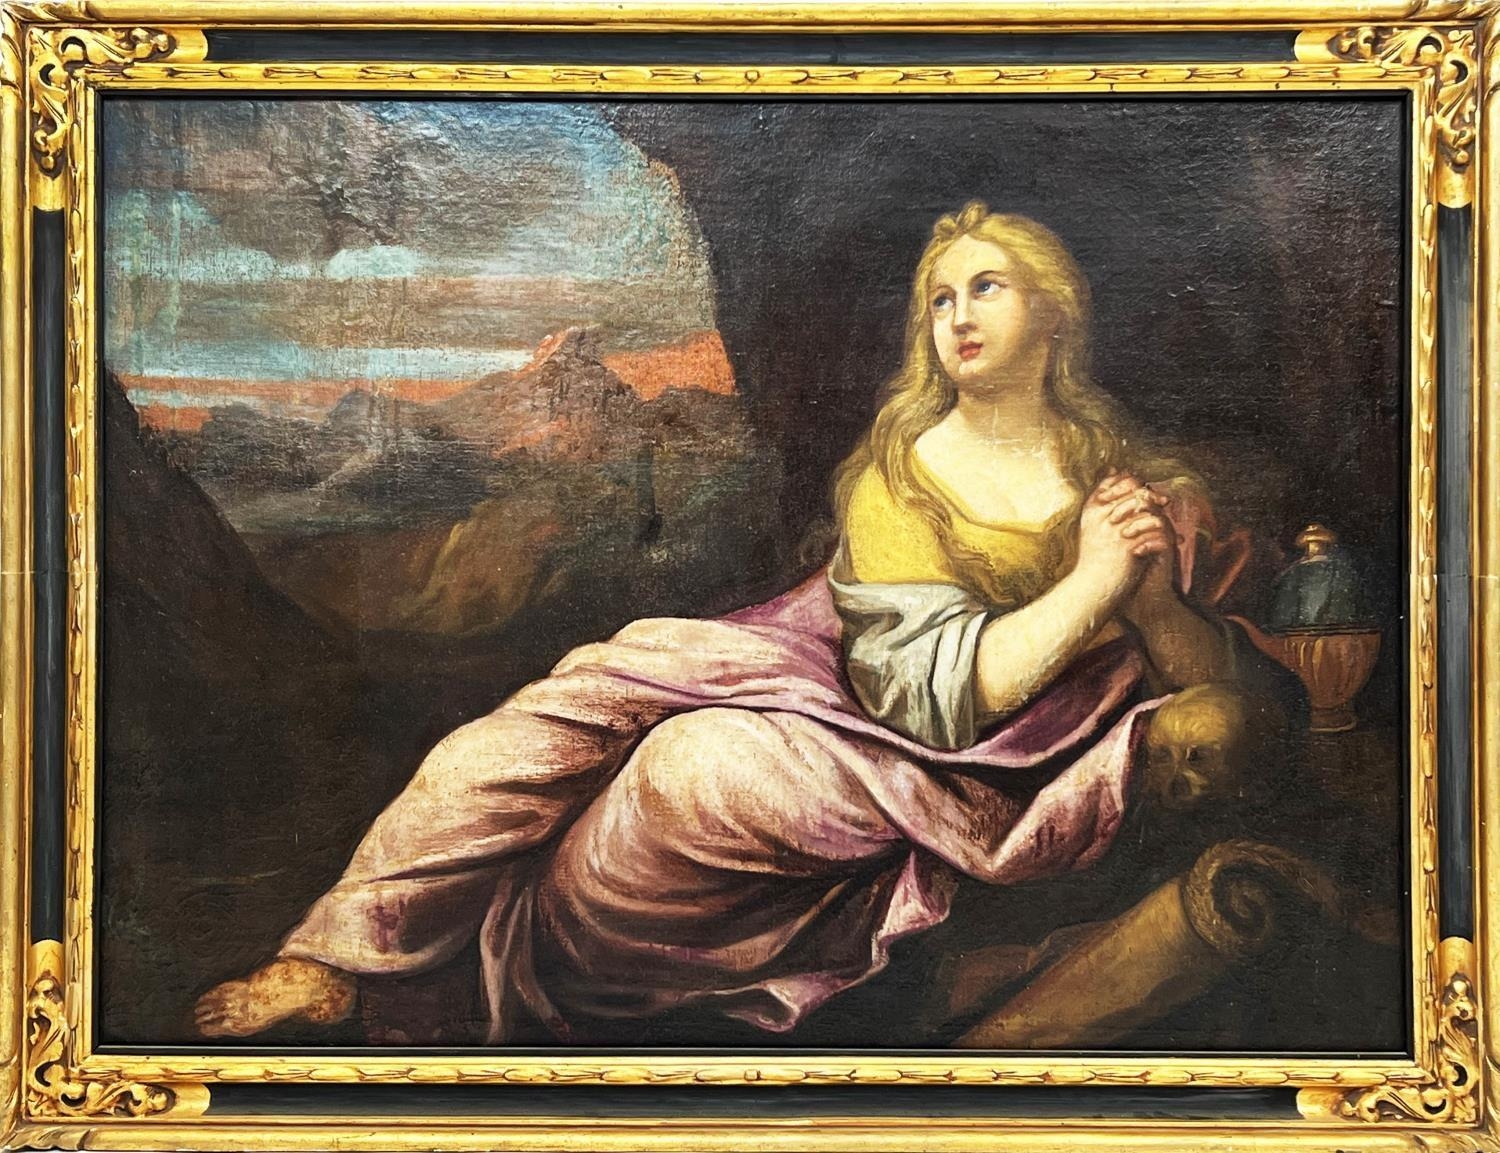 AFTER GUIDO RENI (Italian 1575-1642) 'Mary Magdalene', oil on canvas, 91cm x 125cm, framed.